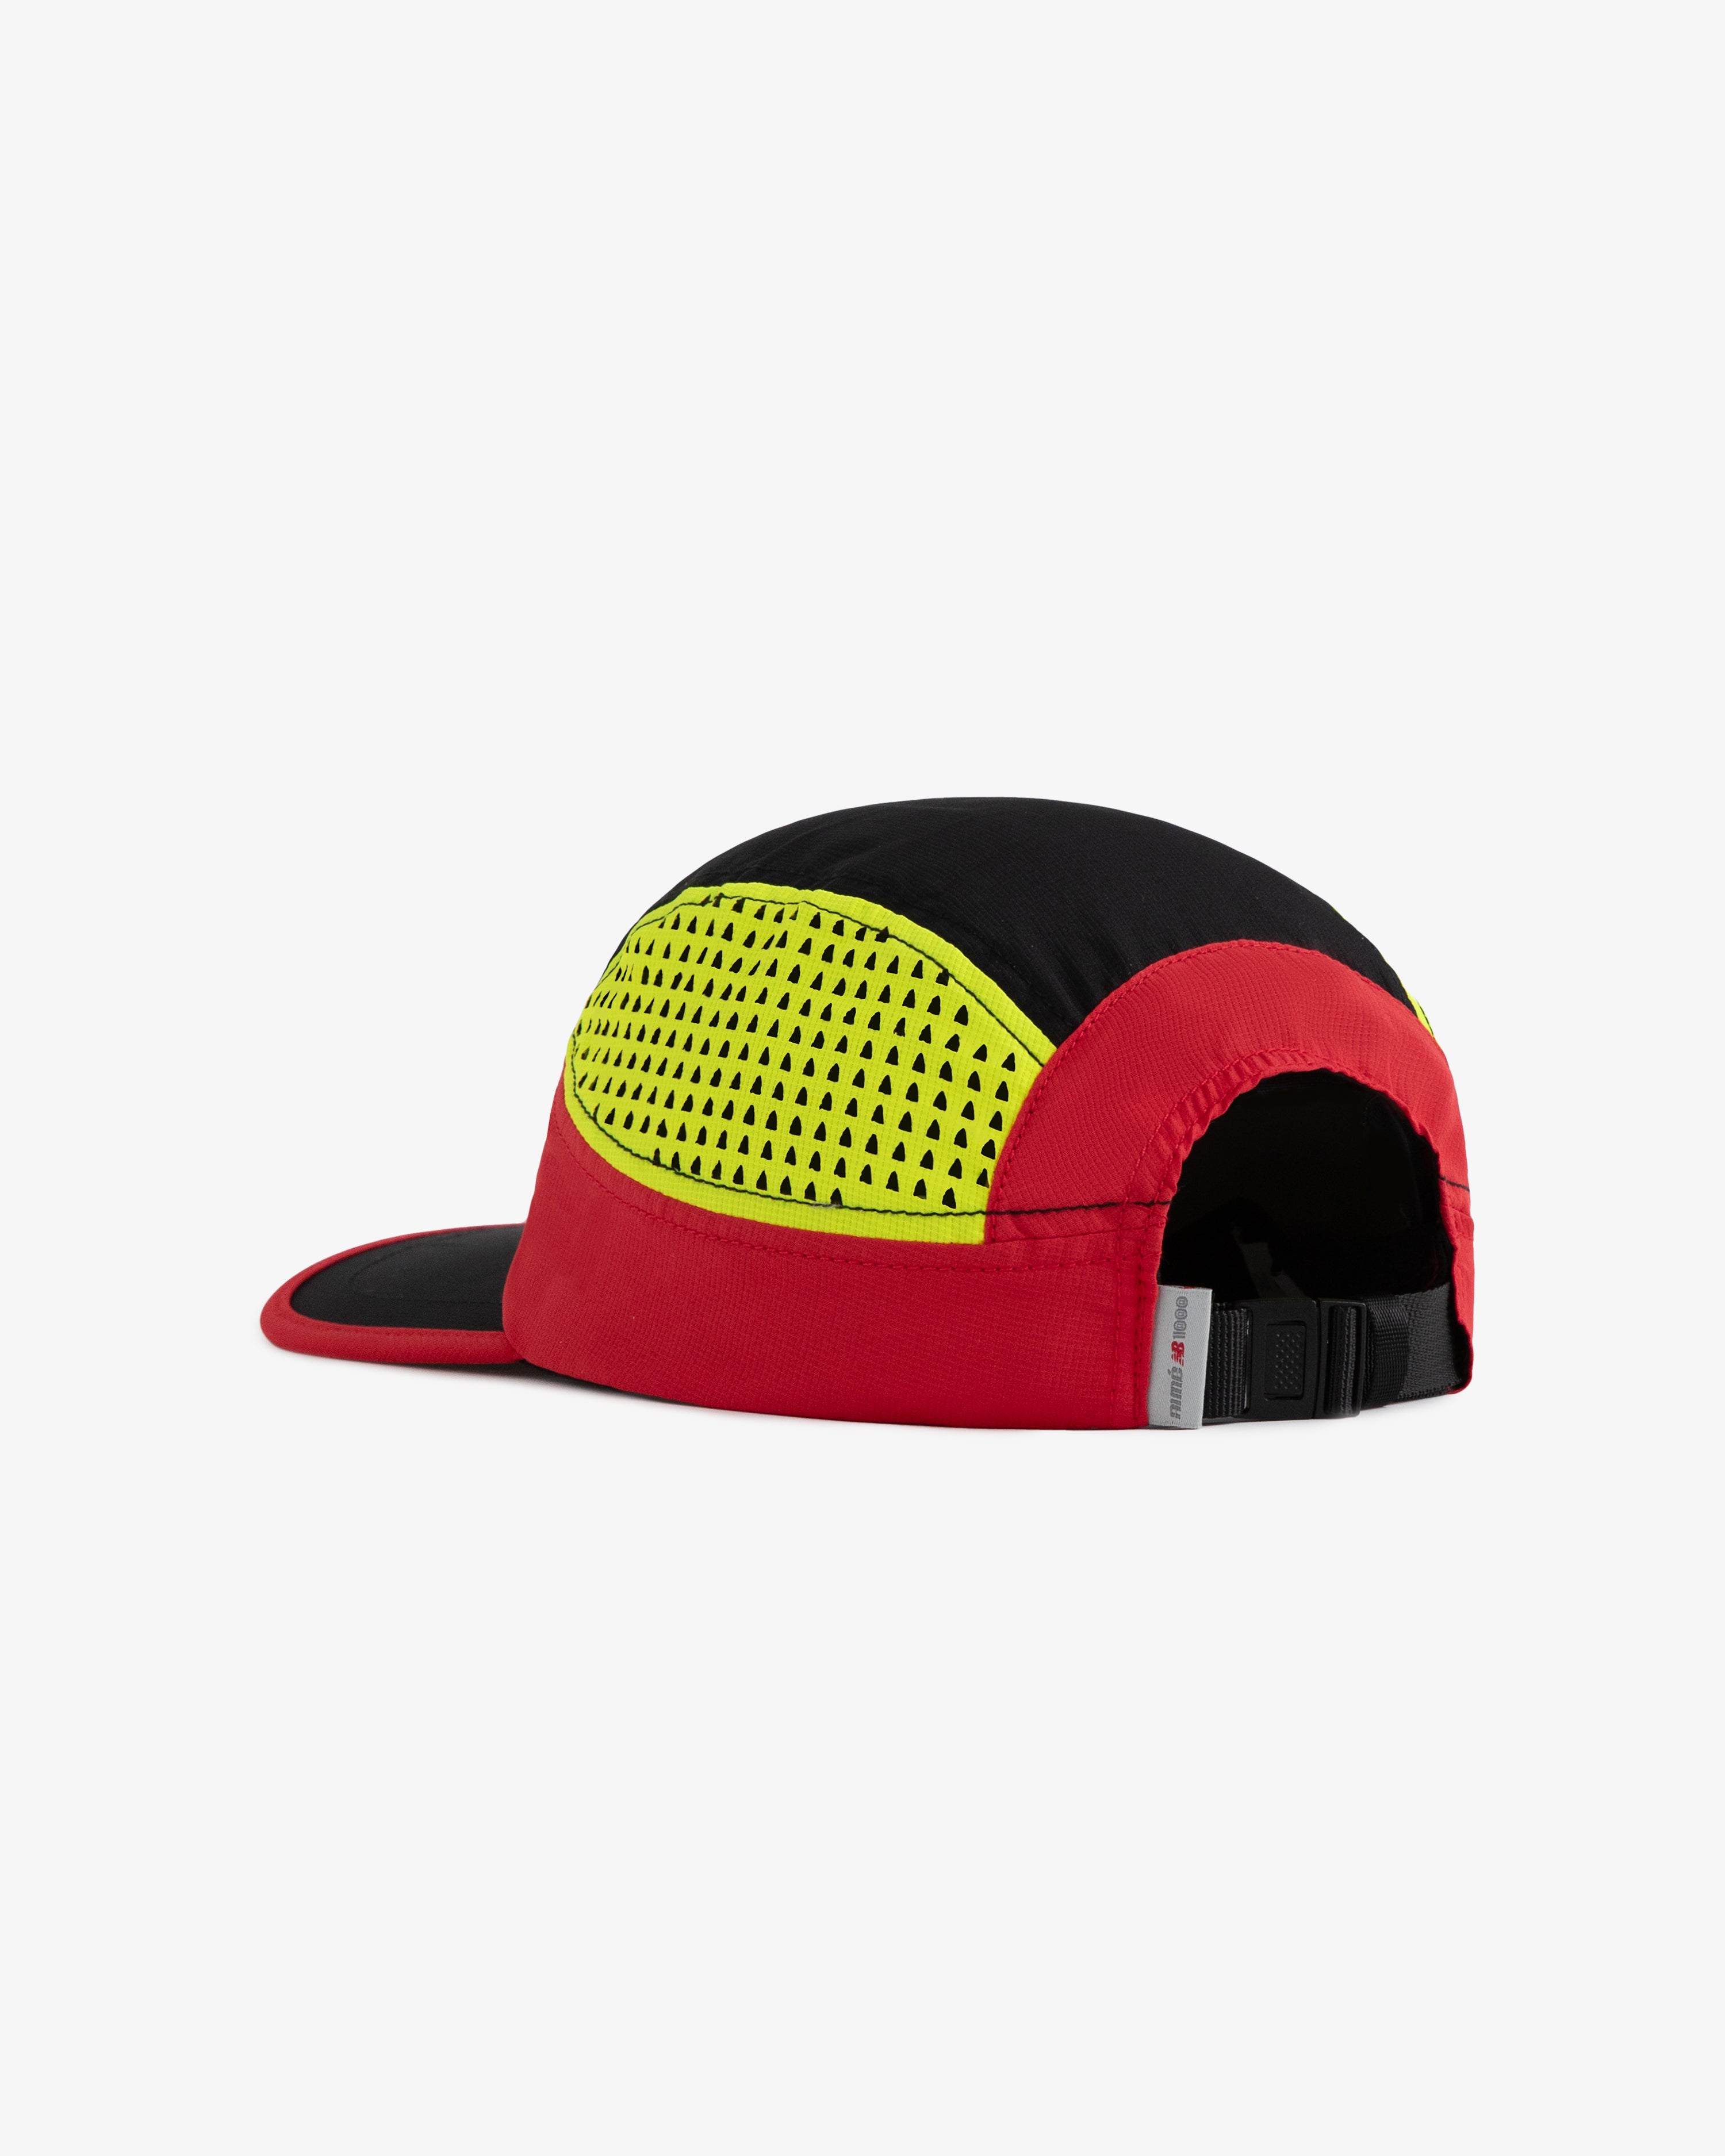 ALD / New Balance Colorblock Sport Hat